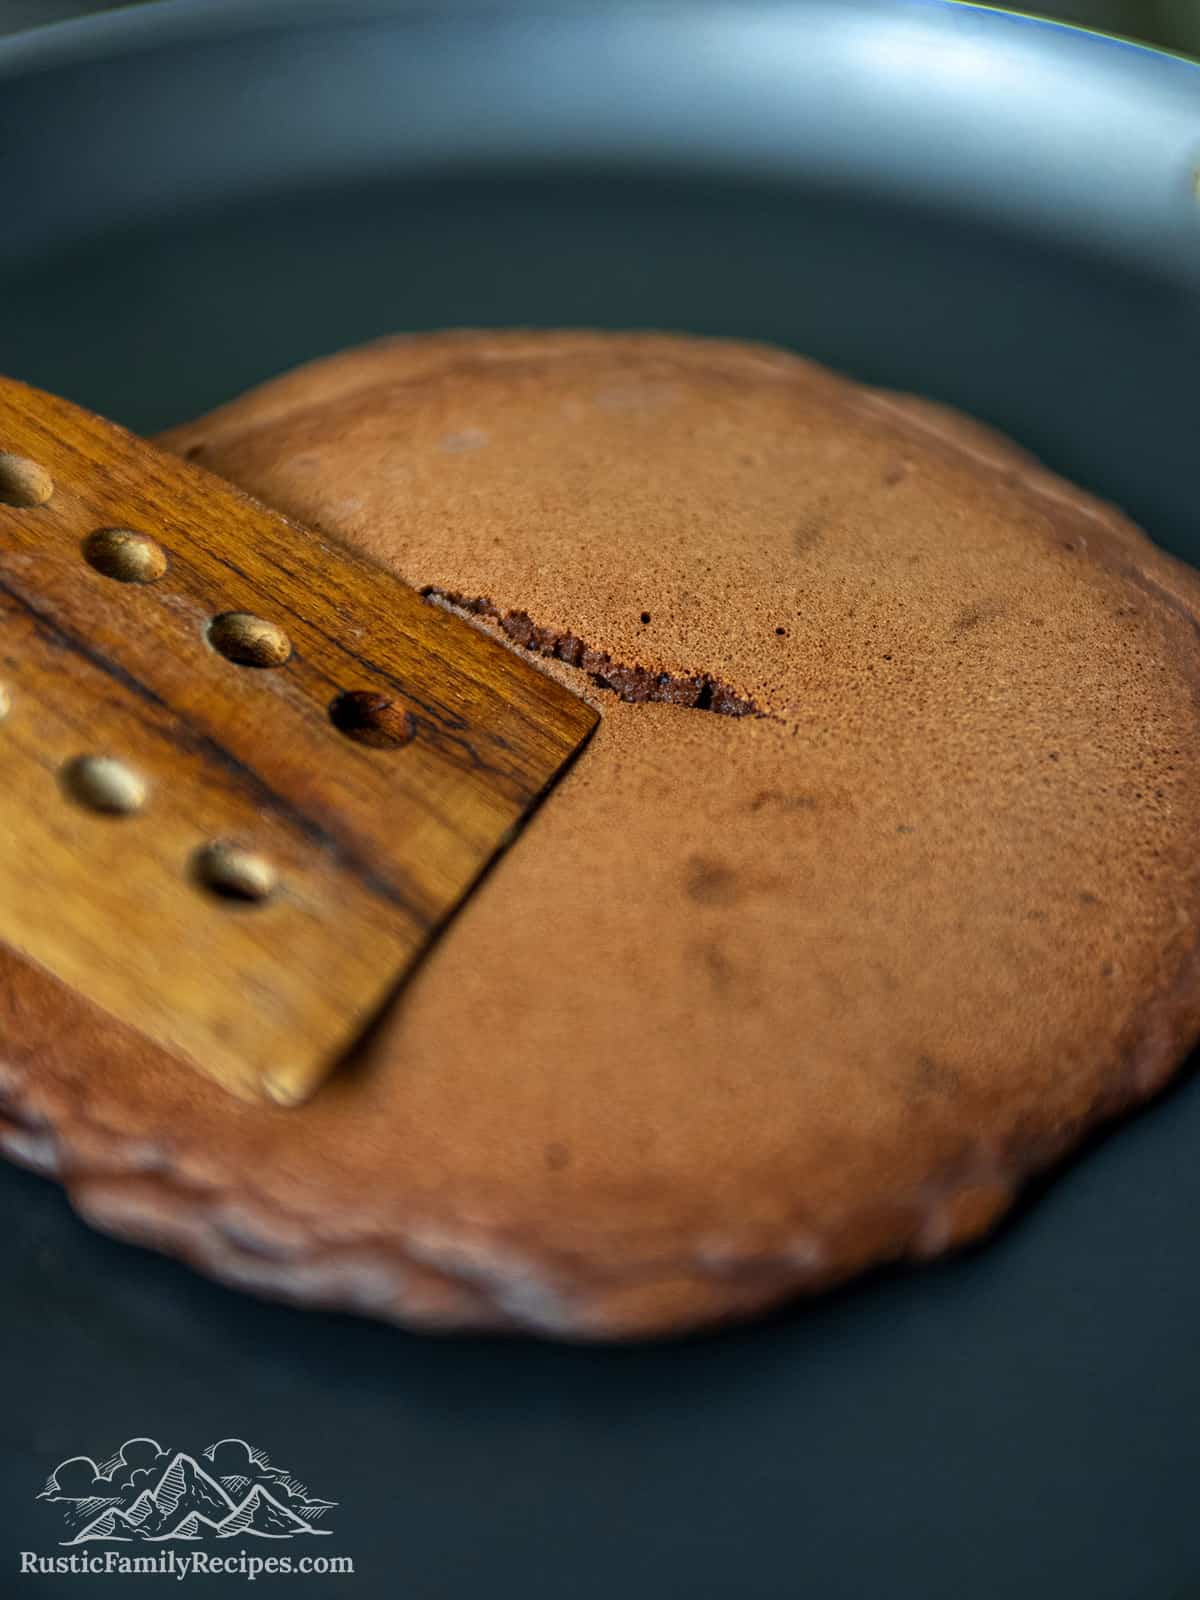 A wood spatula making a small crack in a chocolate pancake